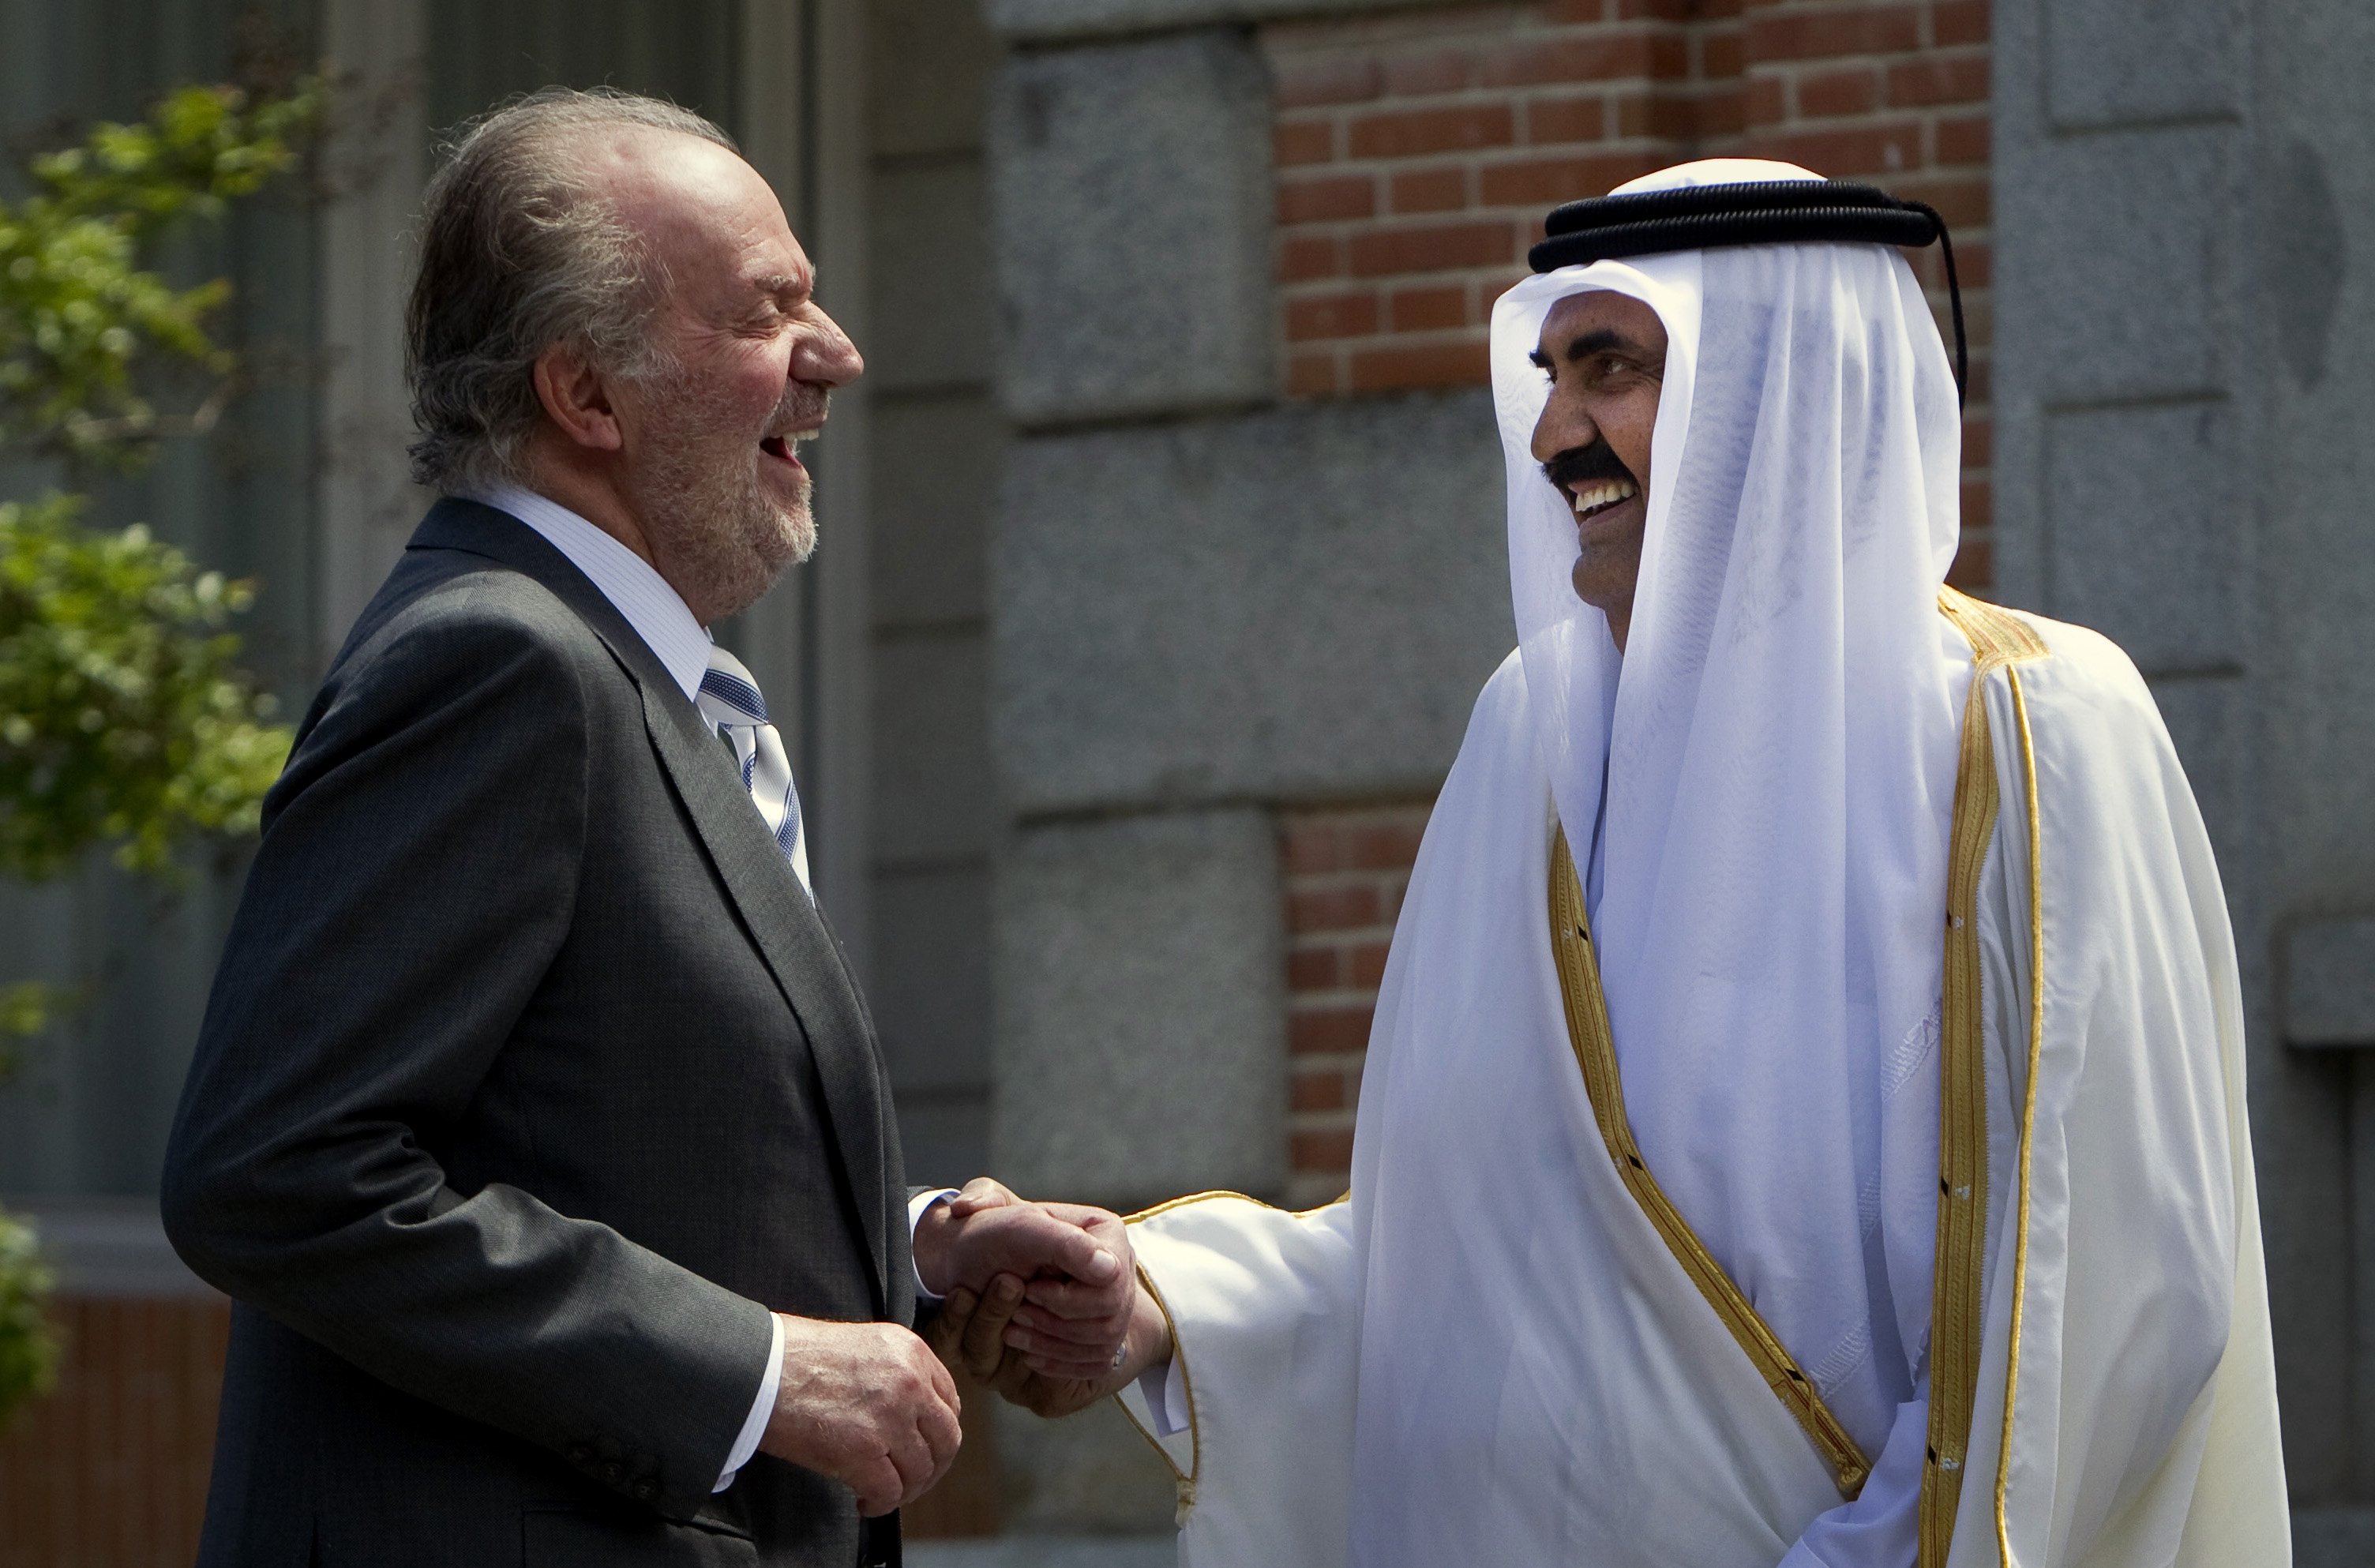 Prosecutors see prima facie case against Spain's Juan Carlos I over Saudi millions